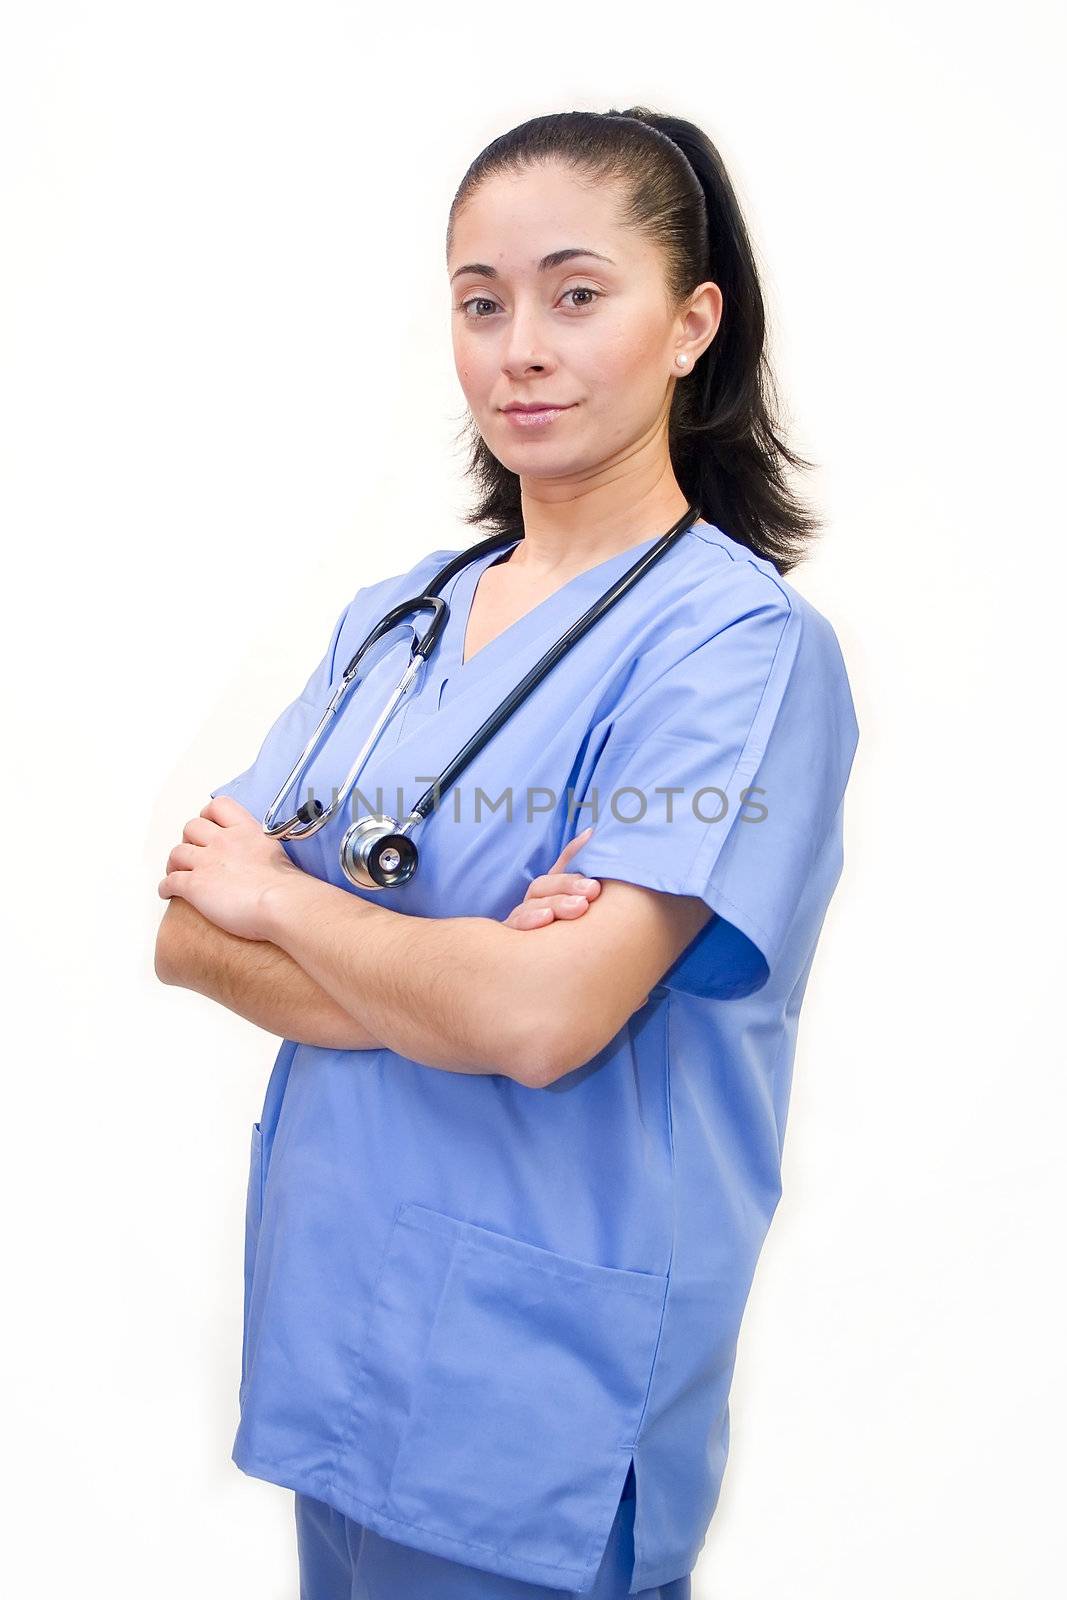 Pretty Hispanic nurse isolated on white